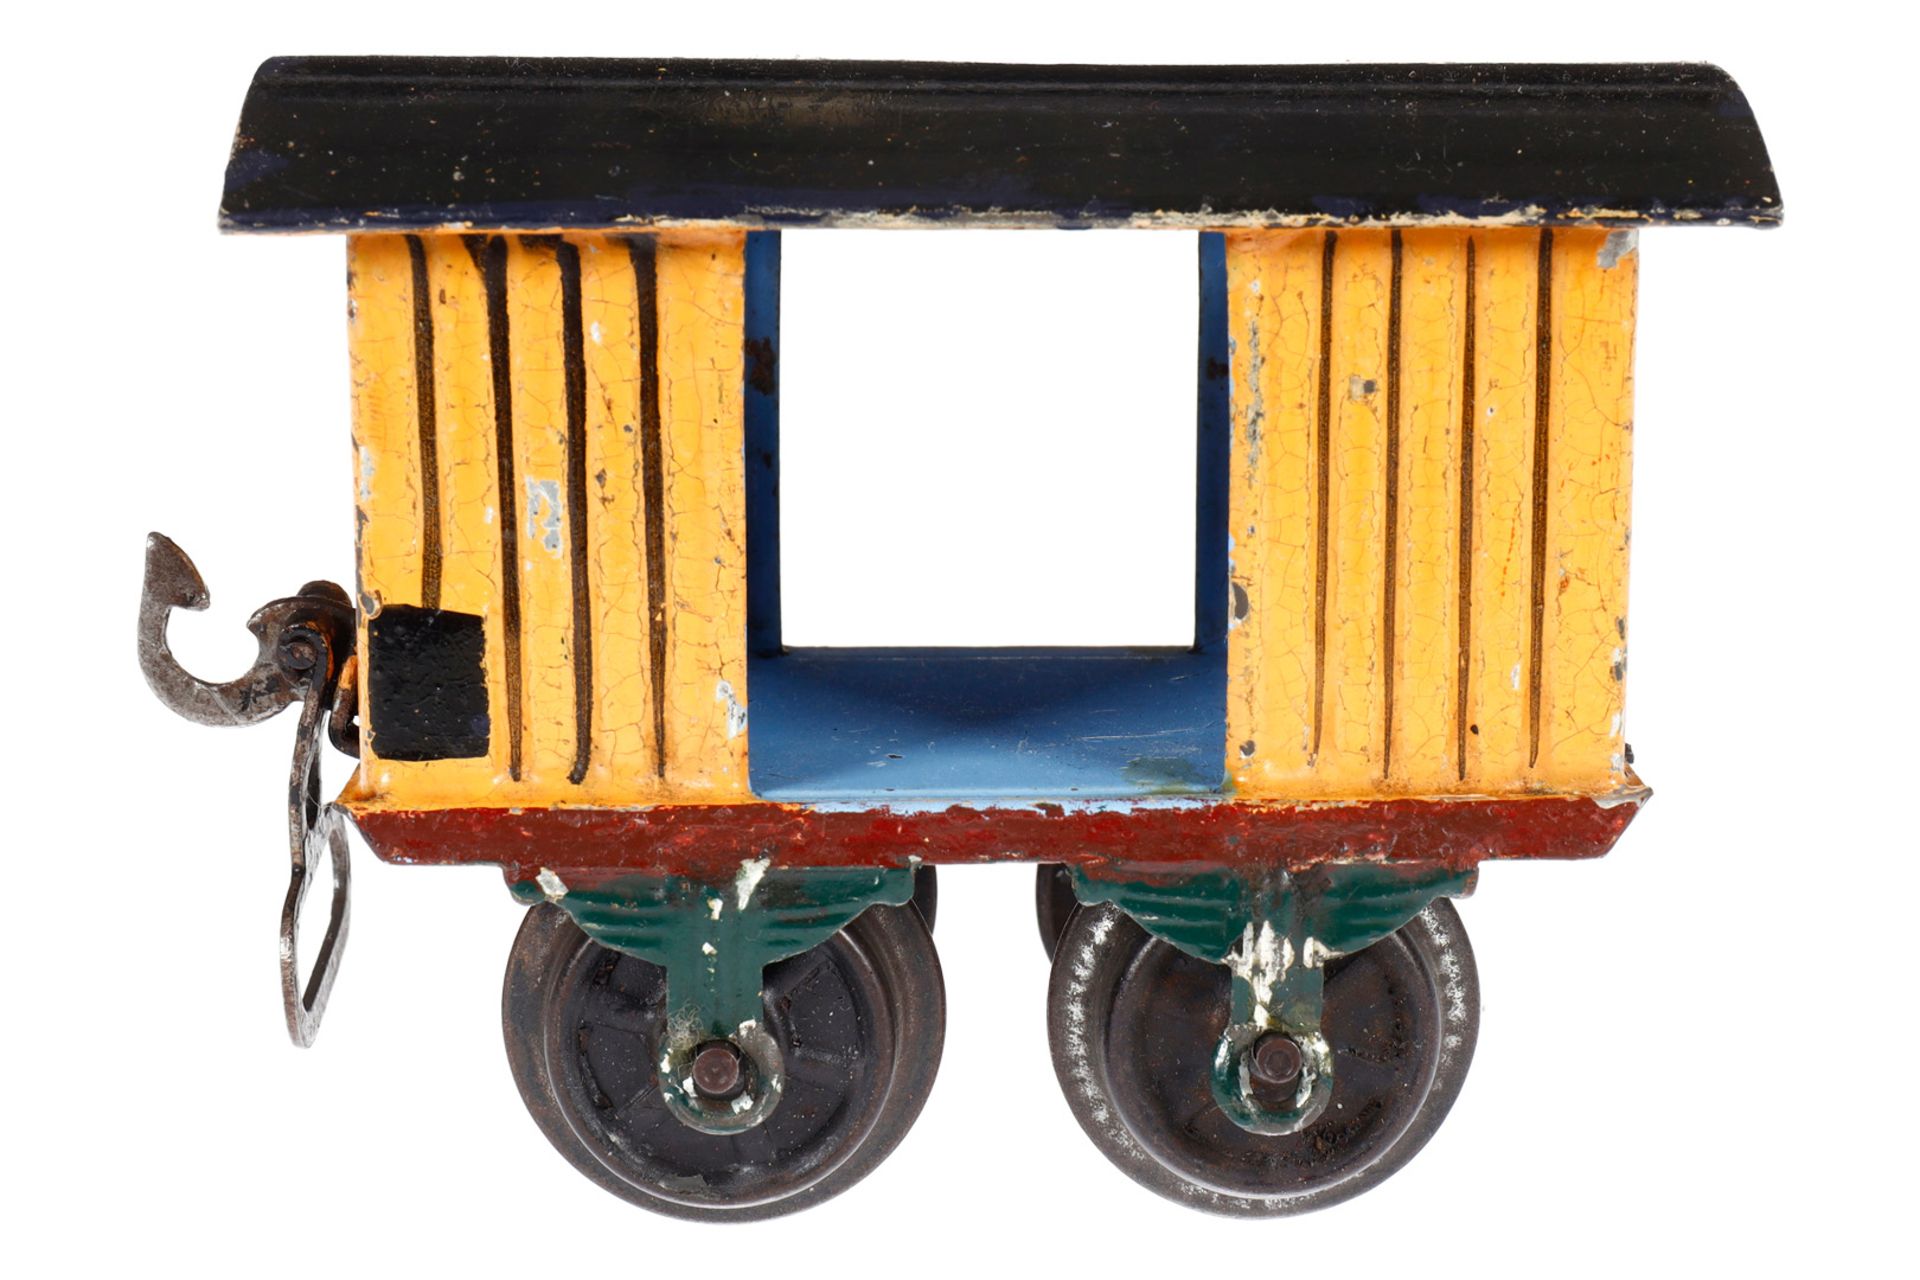 Märklin Gepäckwagen 1803, Spur 0, uralt, HL, mit 2 TÖ, 1 Bügelkupplung fehlt, LS, L 8, Z 3